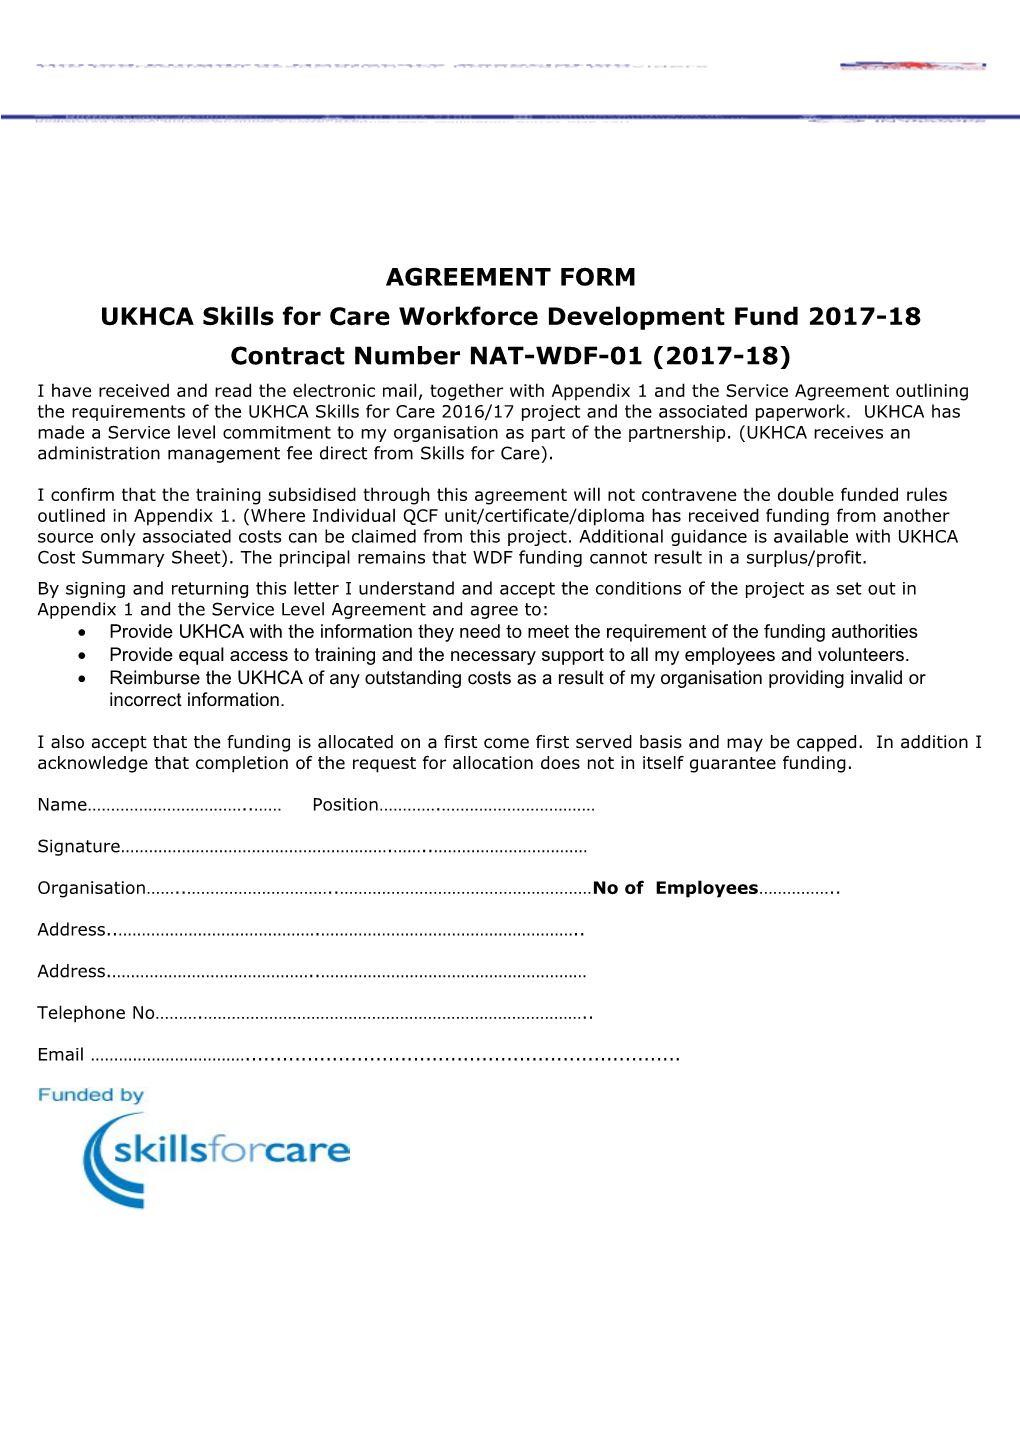 UKHCA Skills for Care Workforce Development Fund 2017-18